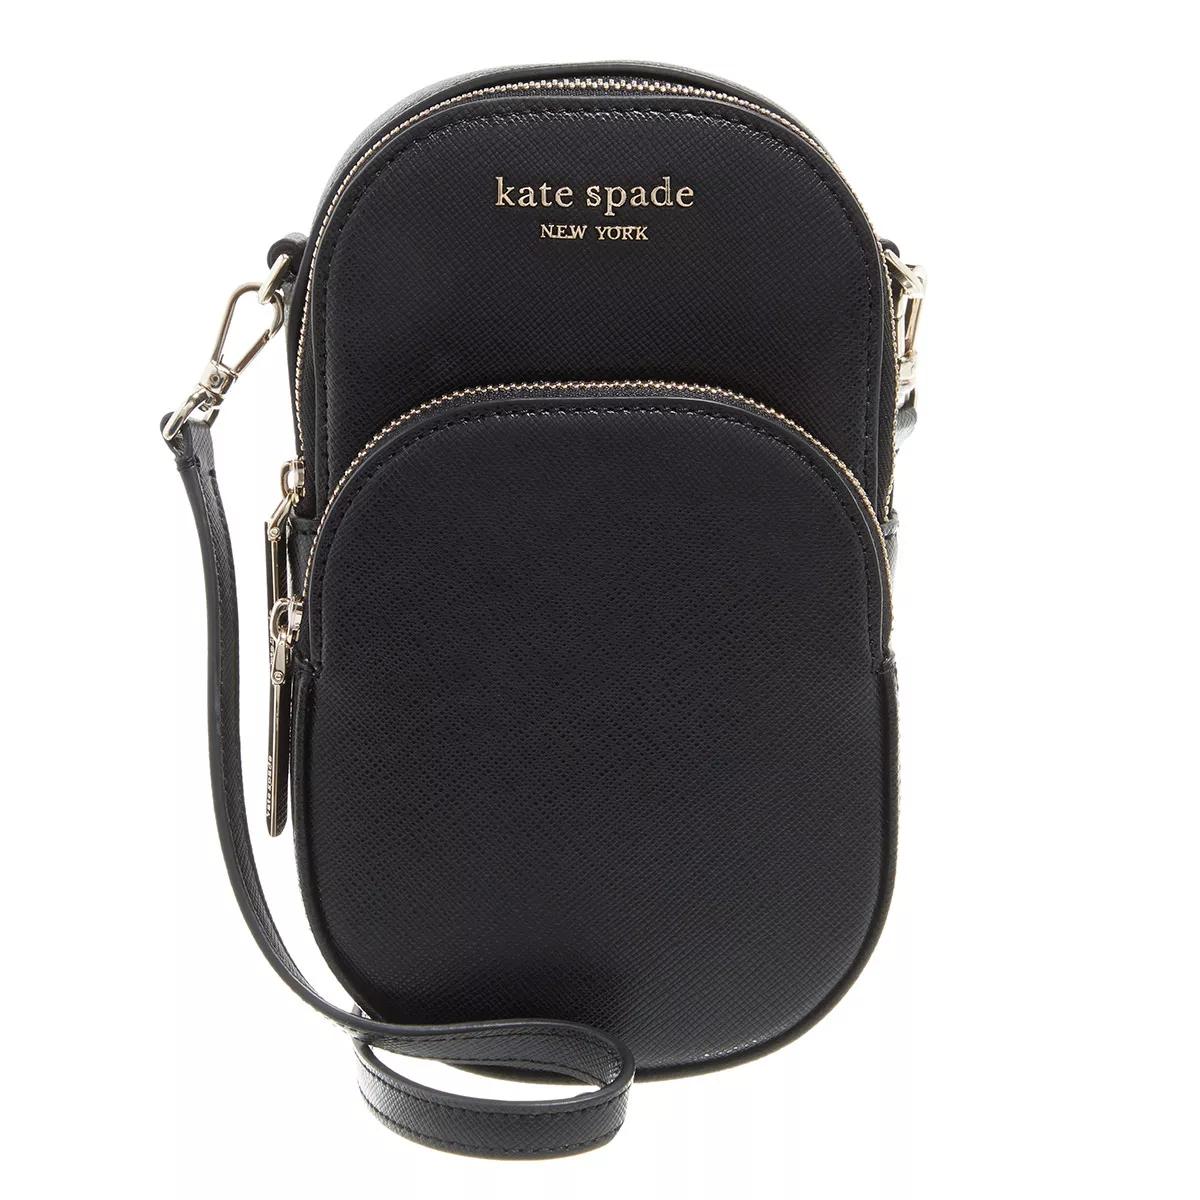 Kate Spade New York Crossbody bags - Spencer Saffiano Leather Phone Crossbody in zwart